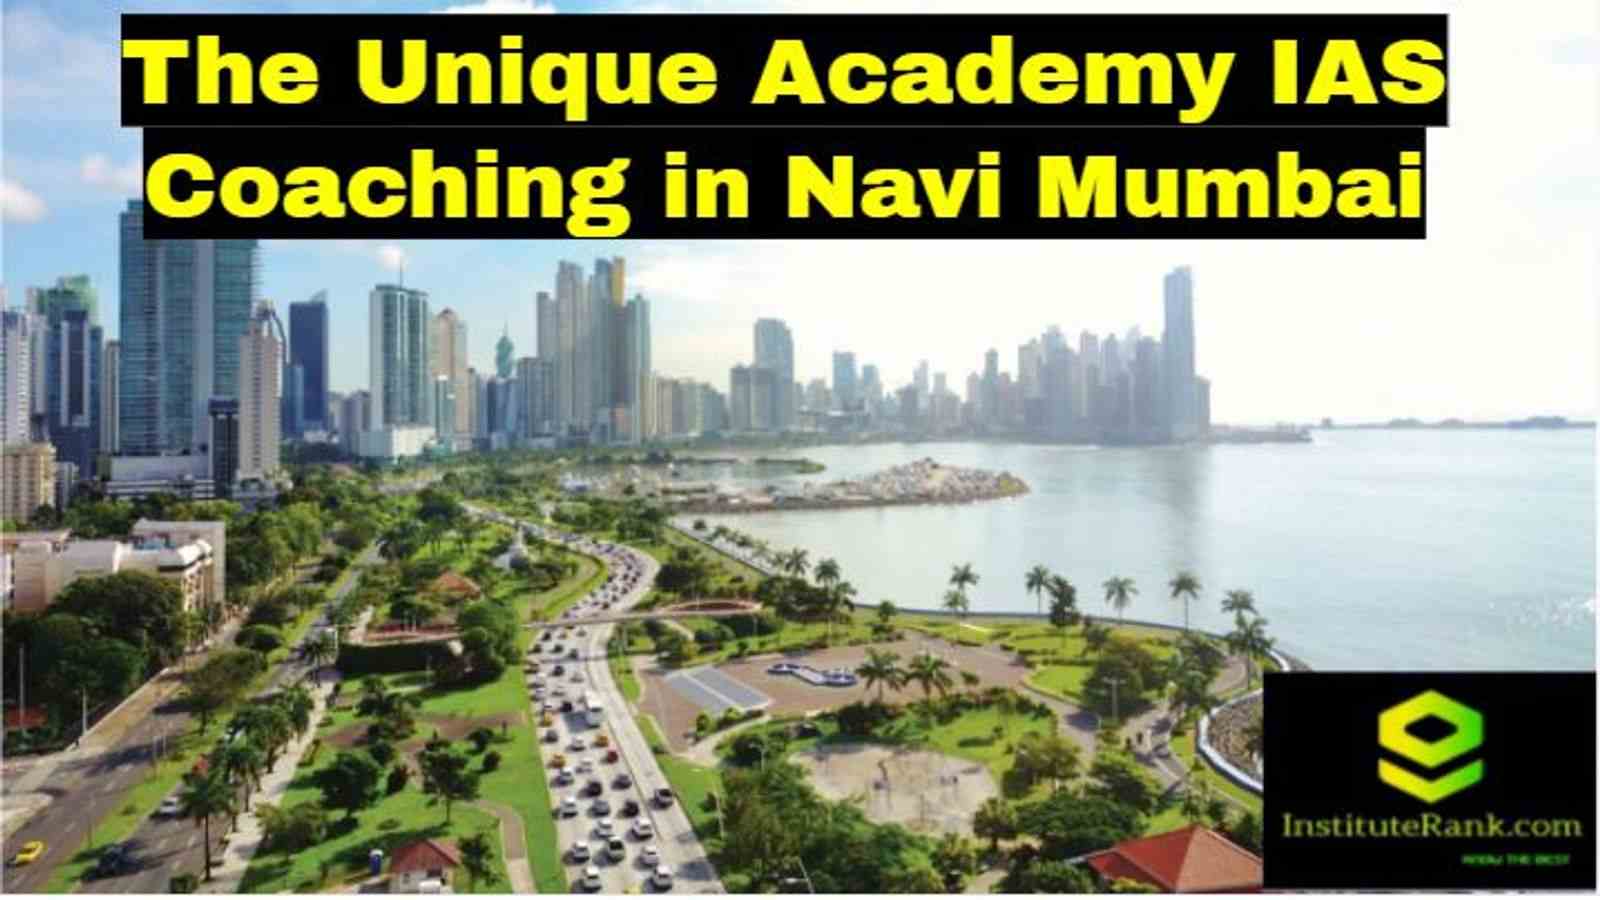 The Unique Academy IAS Coaching in Navi Mumbai